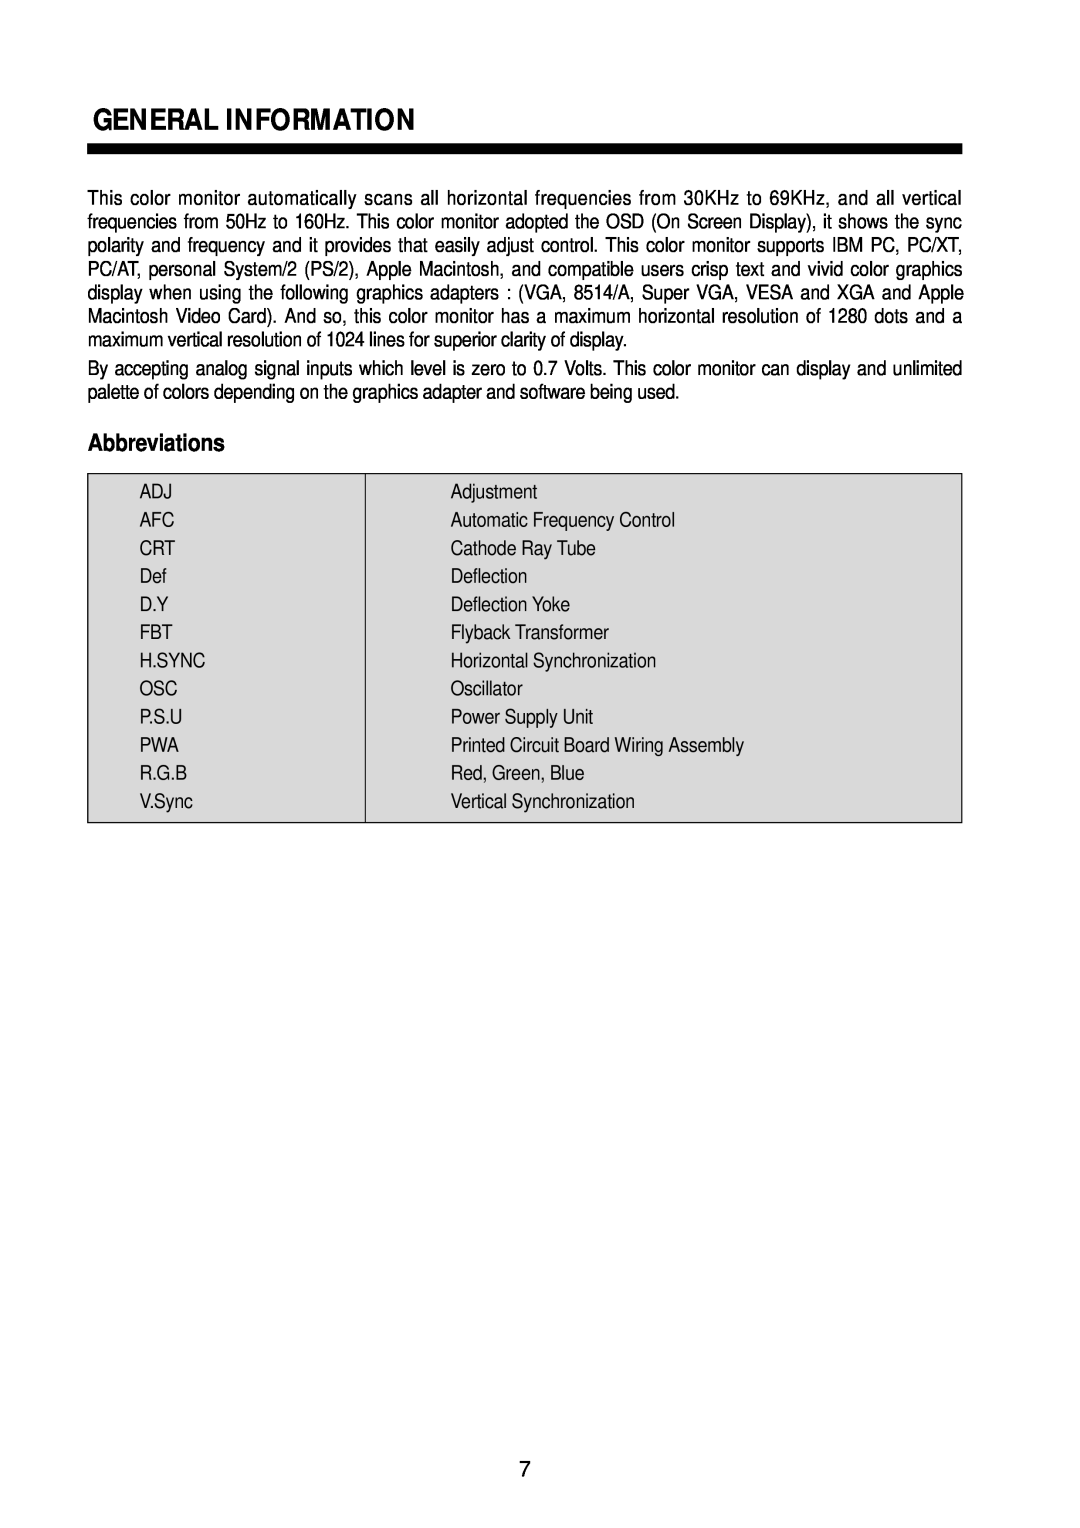 Daewoo 710B service manual General Information, Abbreviations 